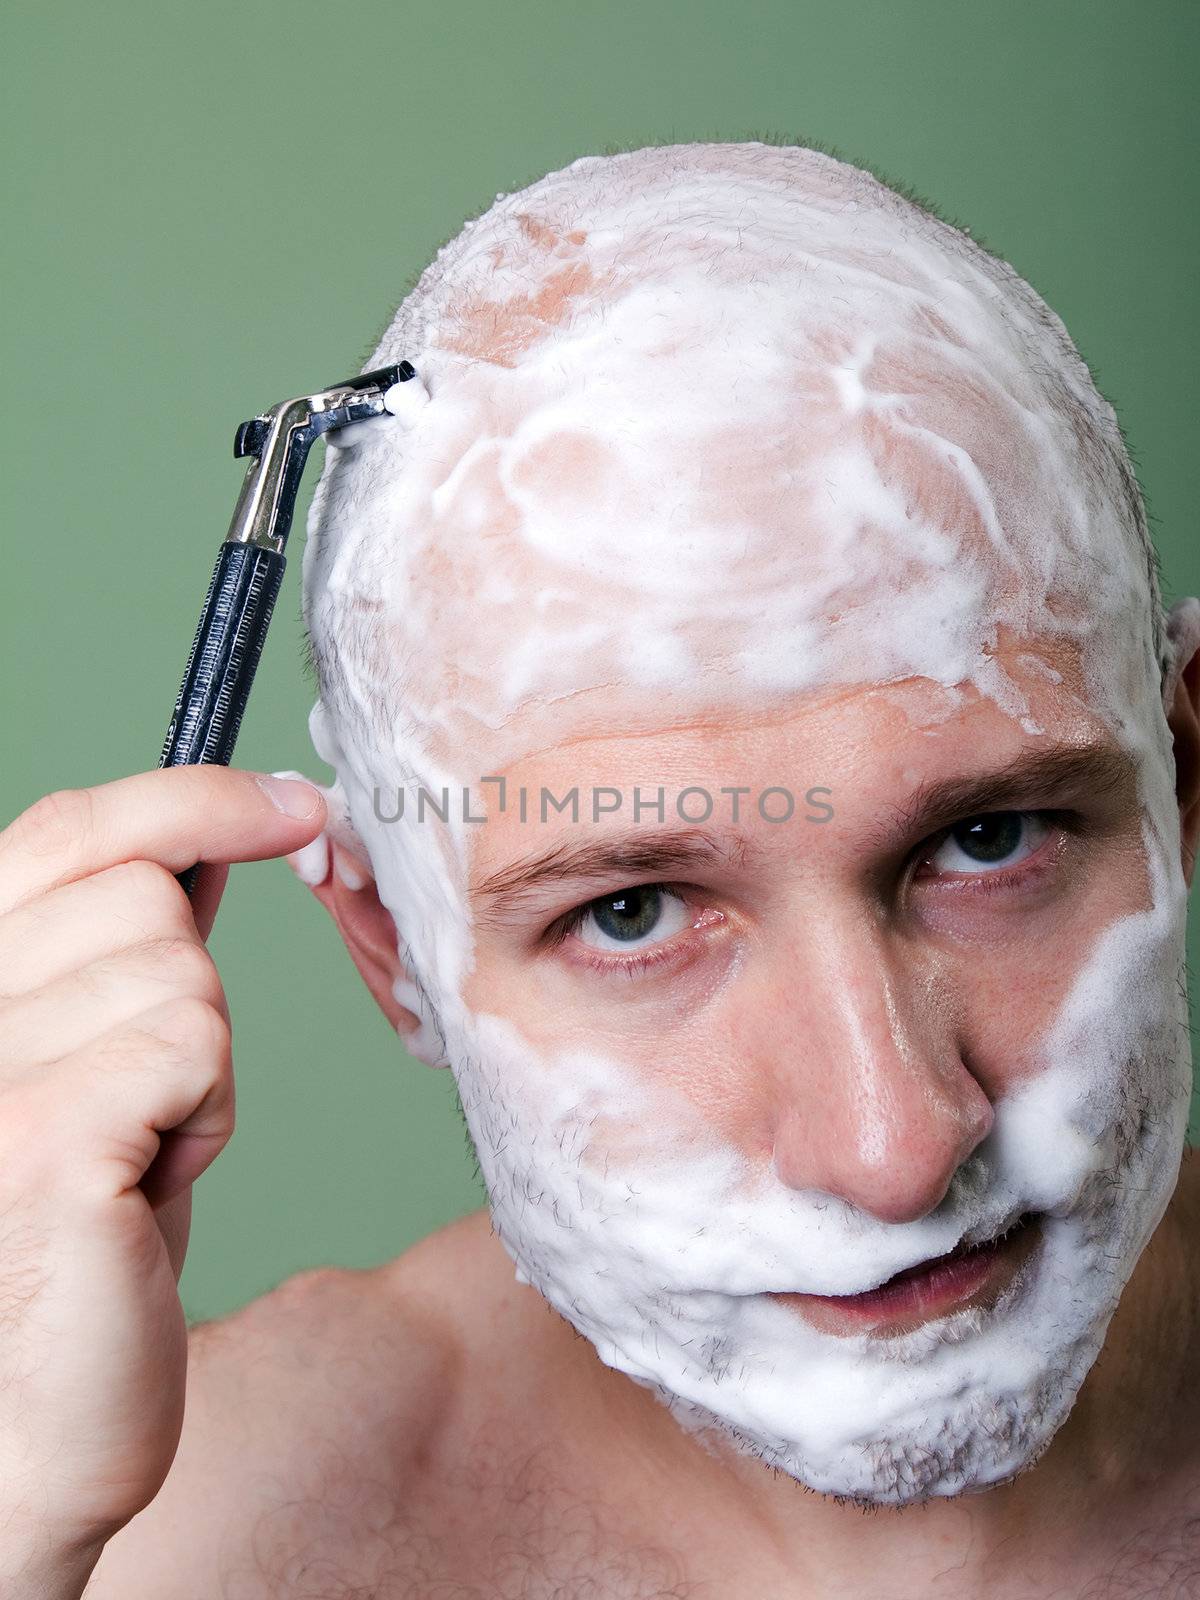 Beauty men with razor shaving blade cutting hair